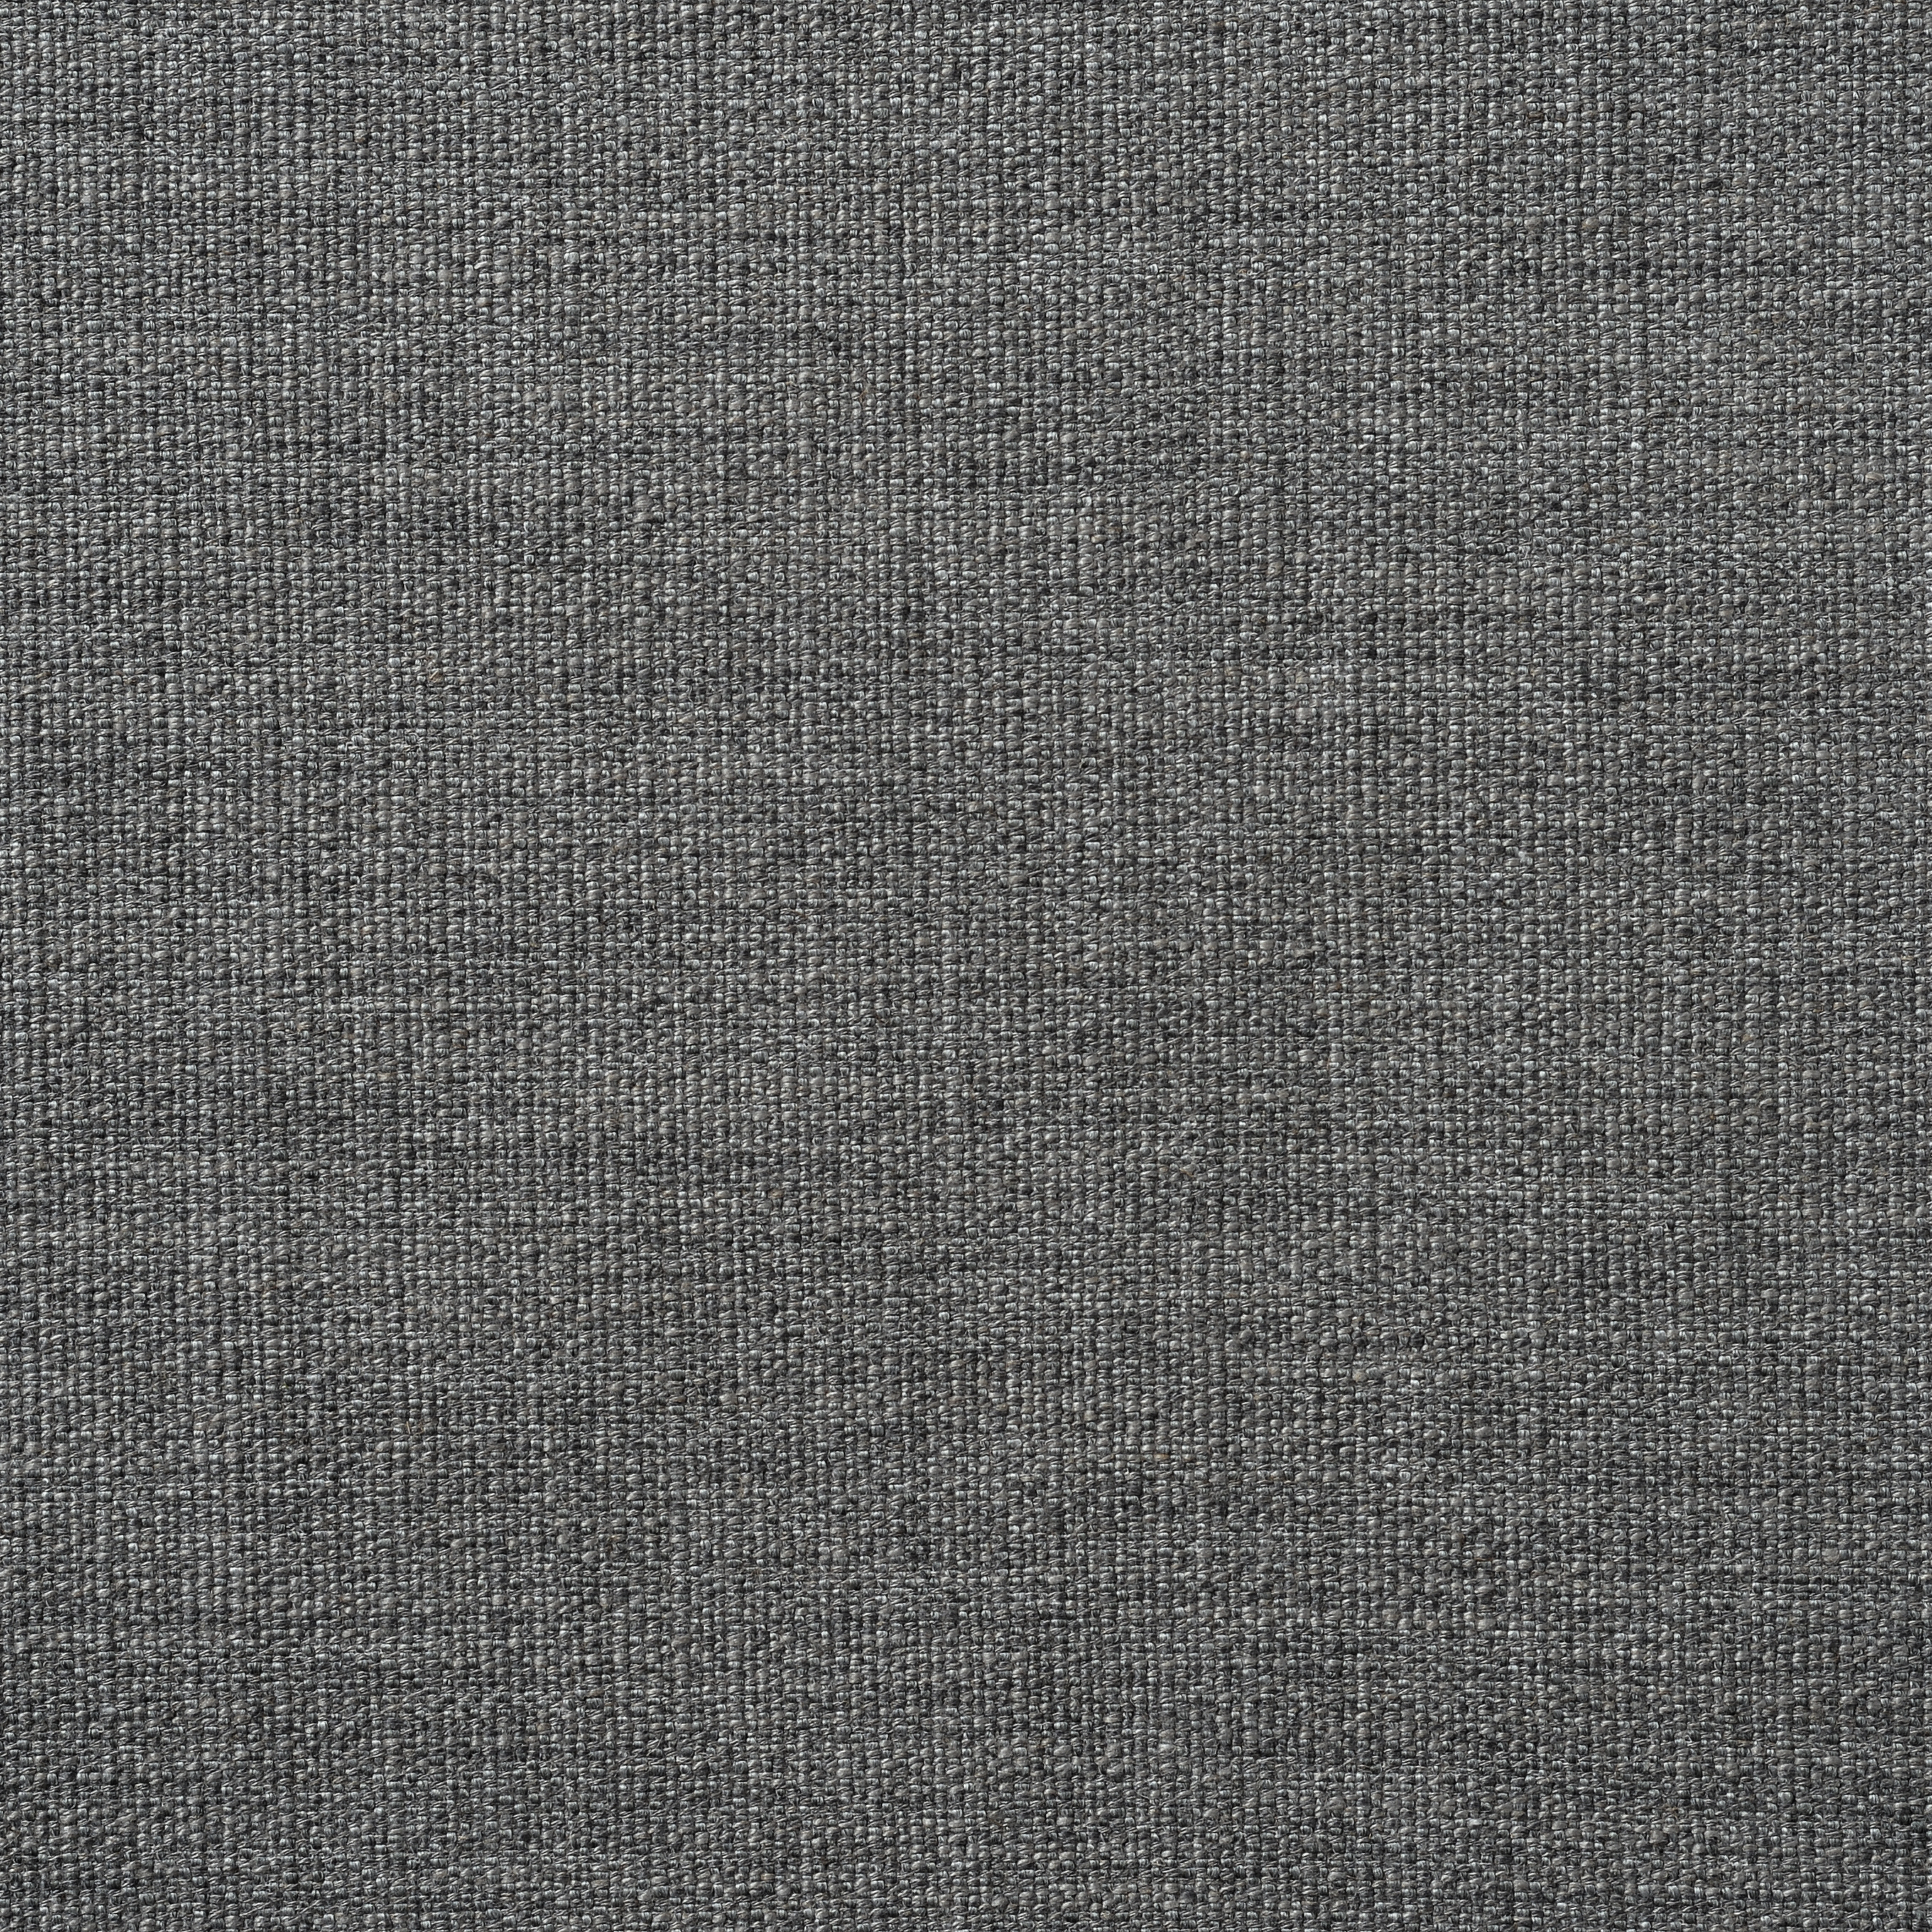 Clara Small Rustic Weave - Grey Marl